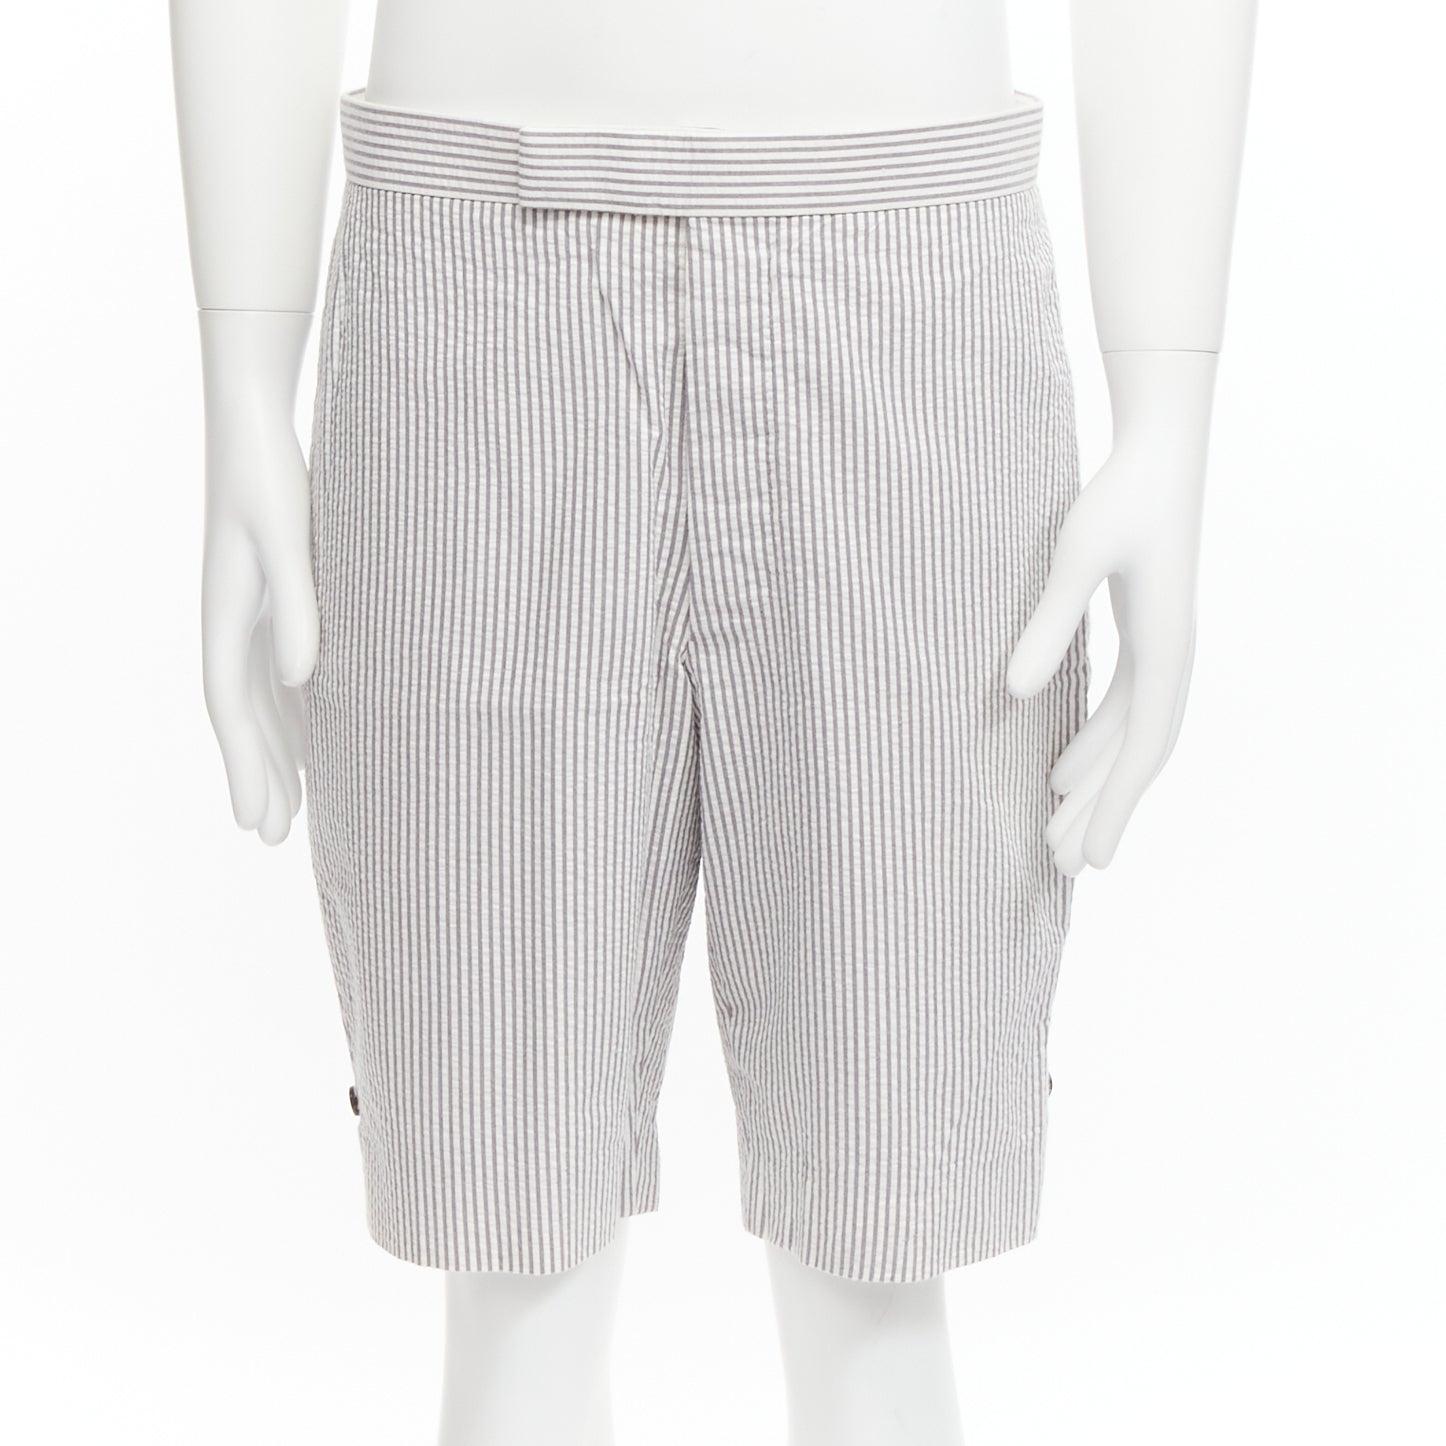 THOM BROWNE grey white striped seersucker blazer jacket shorts suit Sz. 3 L For Sale 5